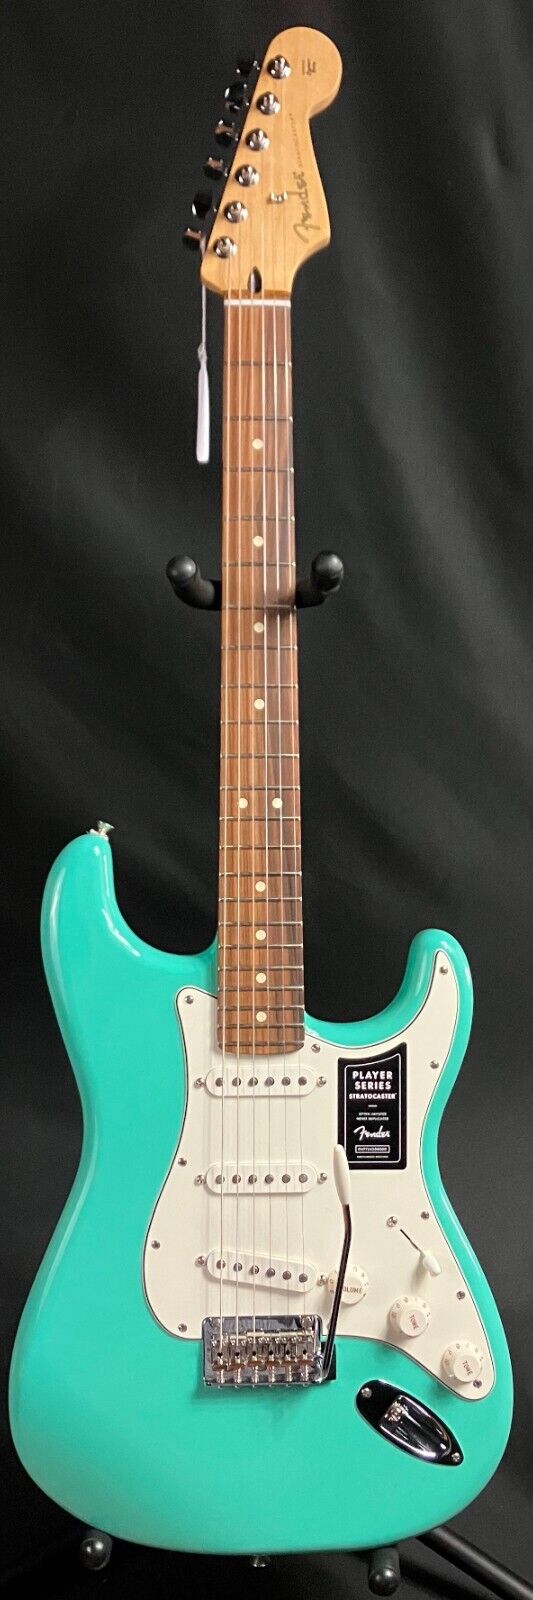 Fender Player Stratocaster Electric Guitar Sea Foam Green Finish